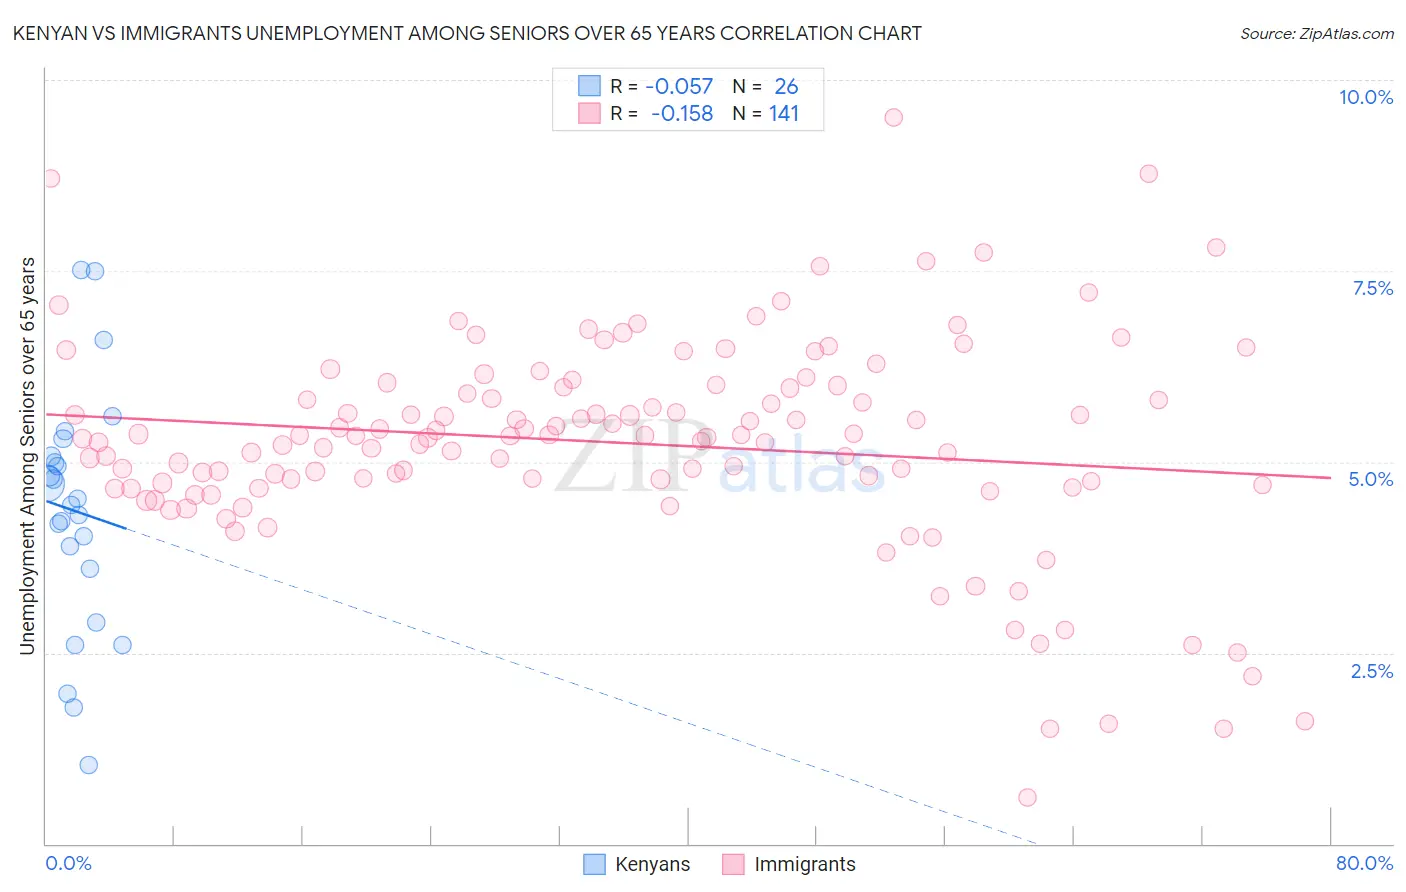 Kenyan vs Immigrants Unemployment Among Seniors over 65 years